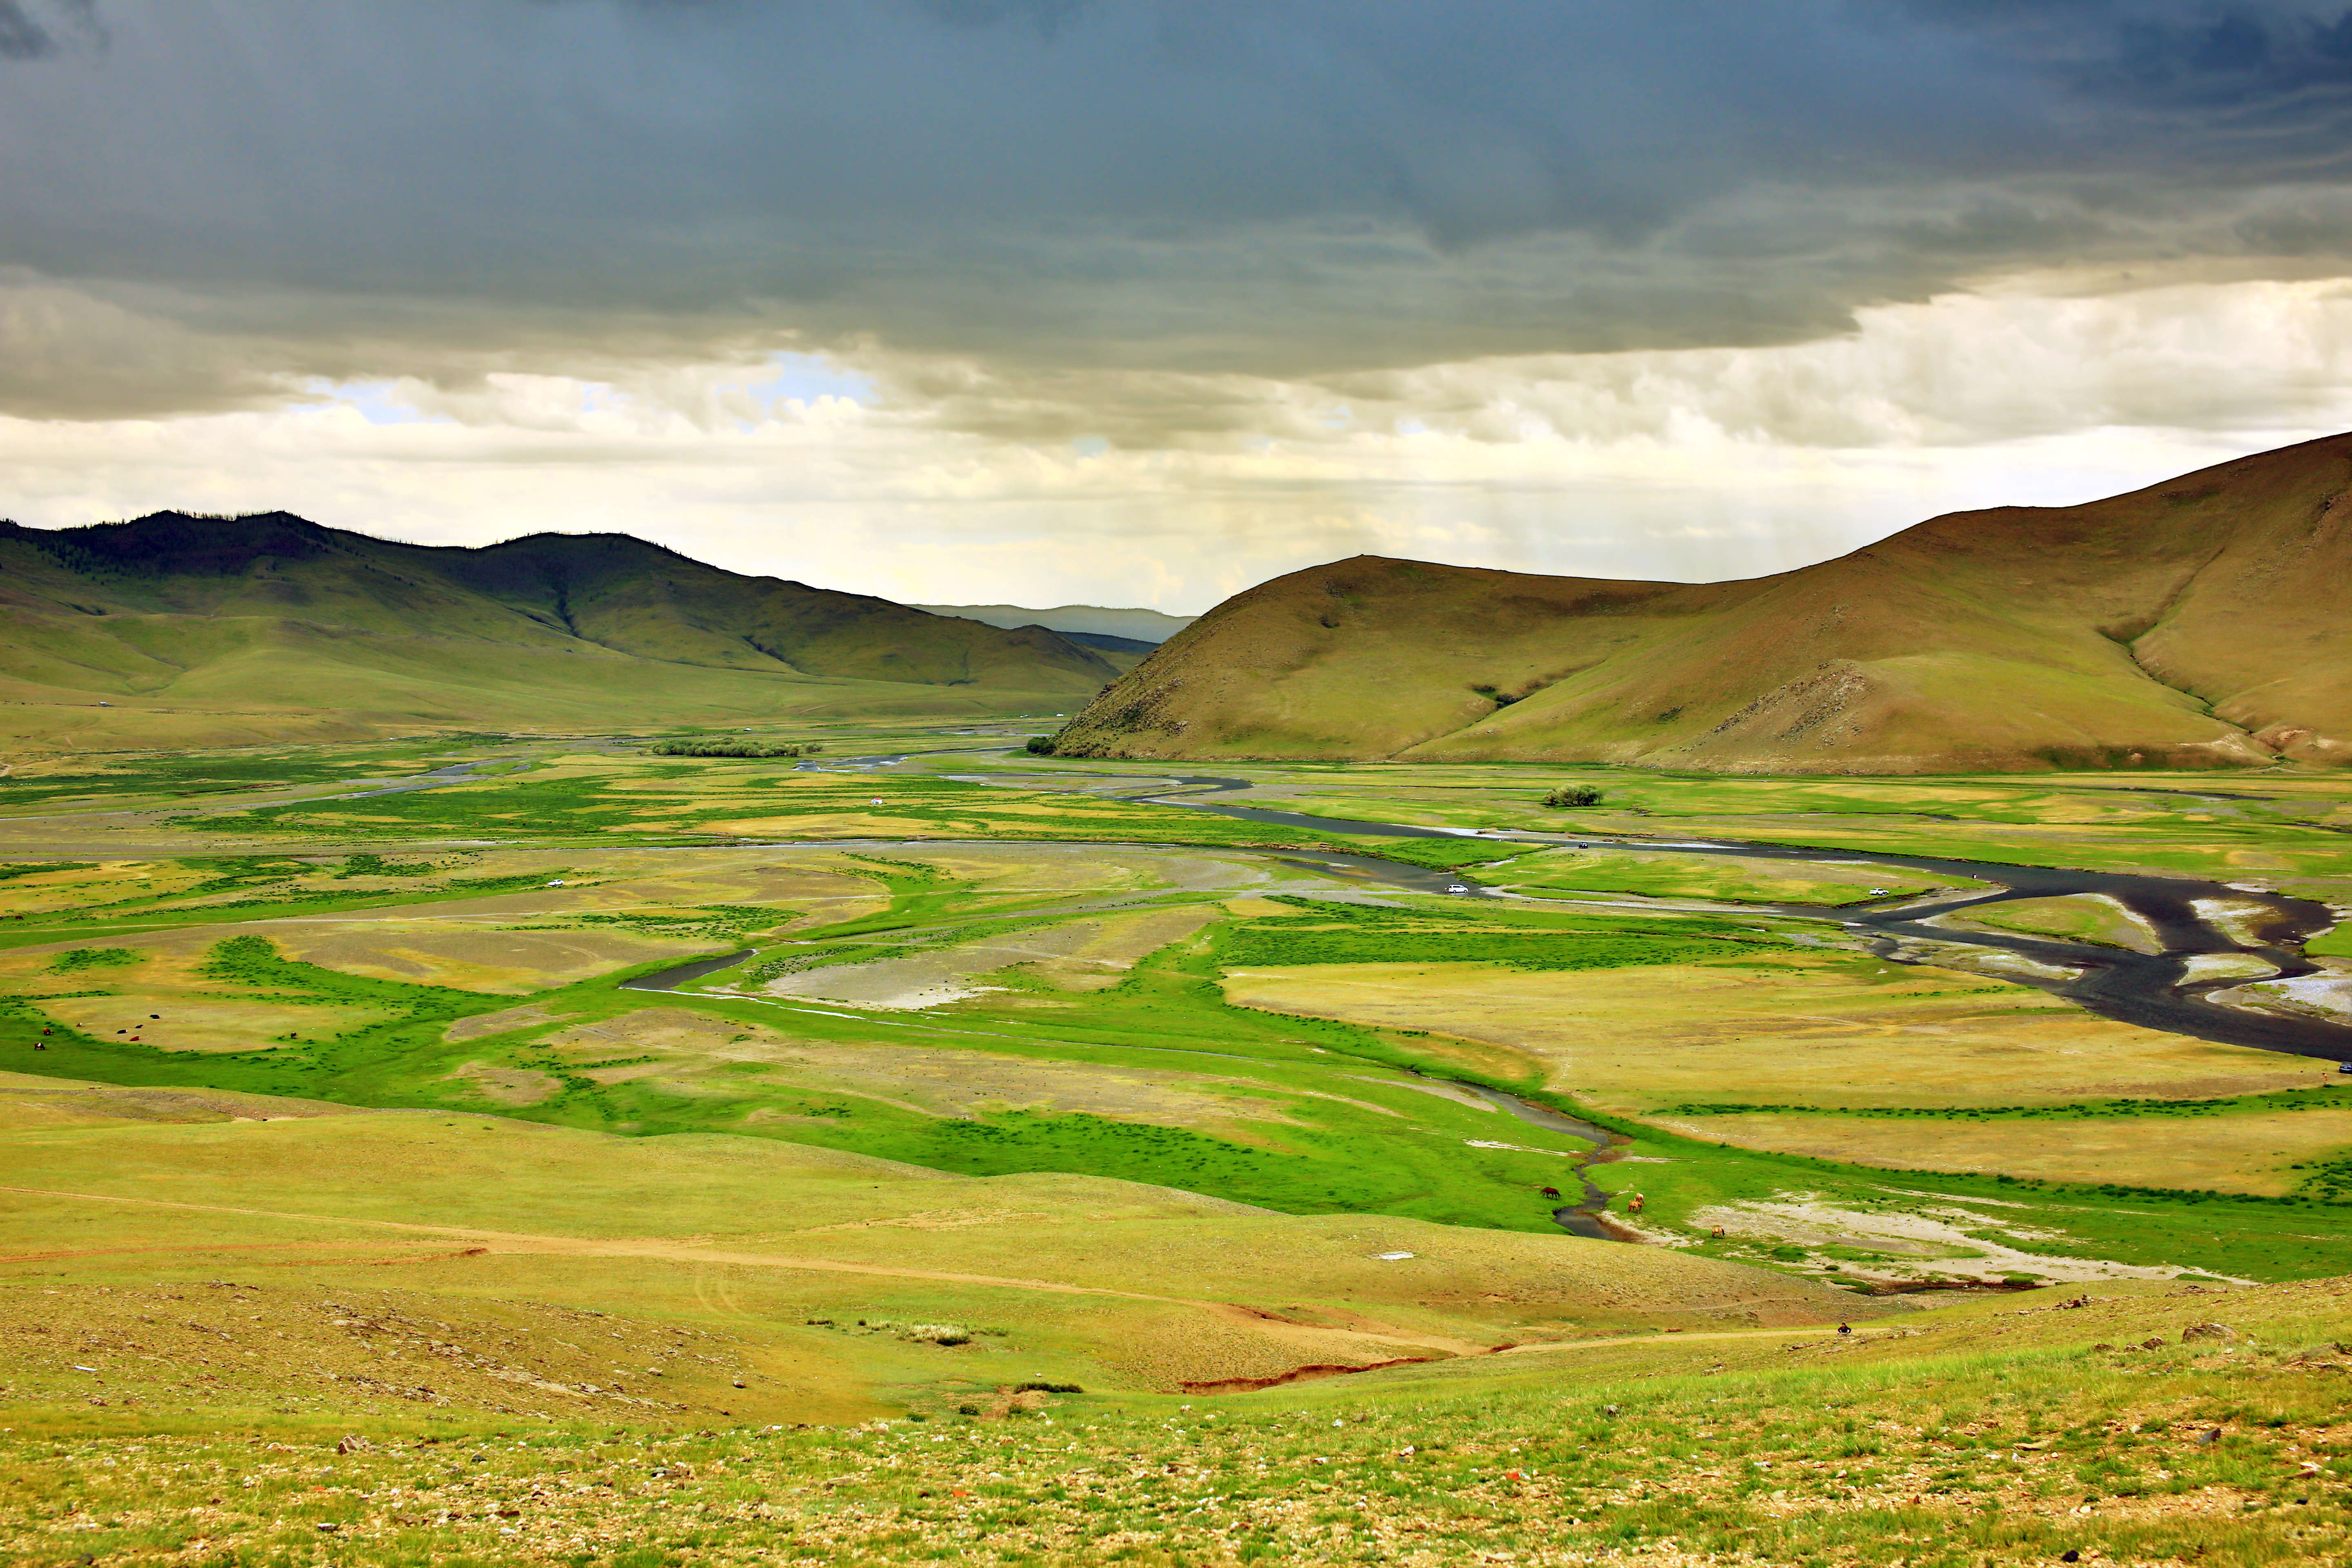 Discover Mongolia